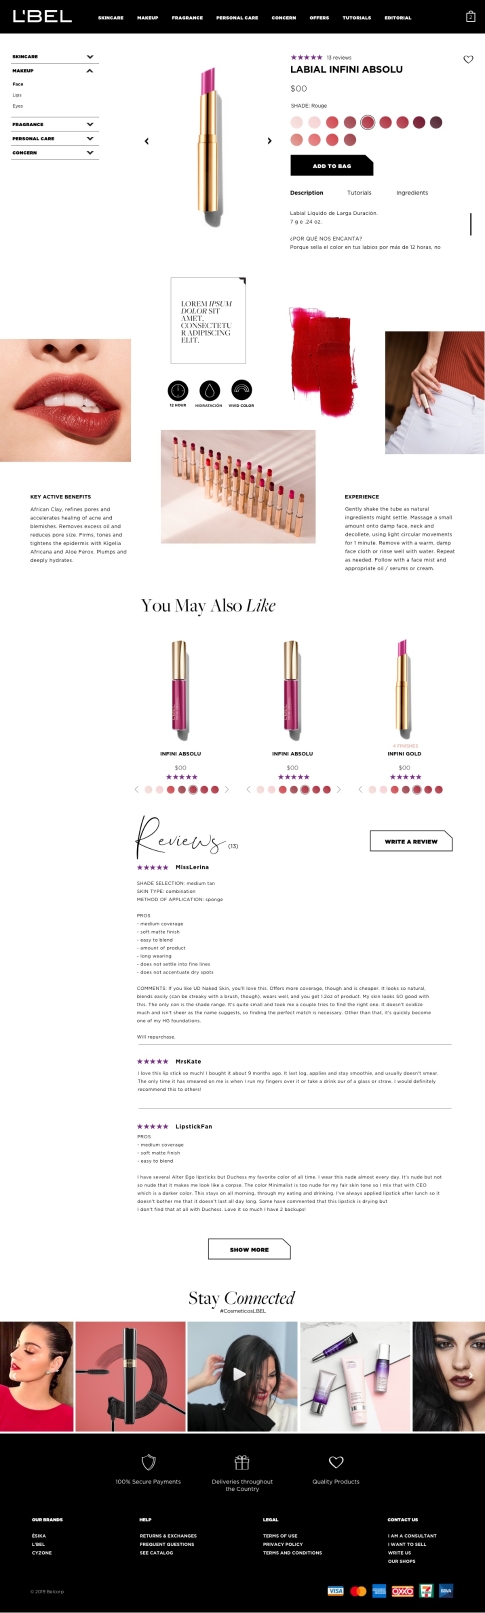 L’bel Latin American beauty brand e-commerce website design 